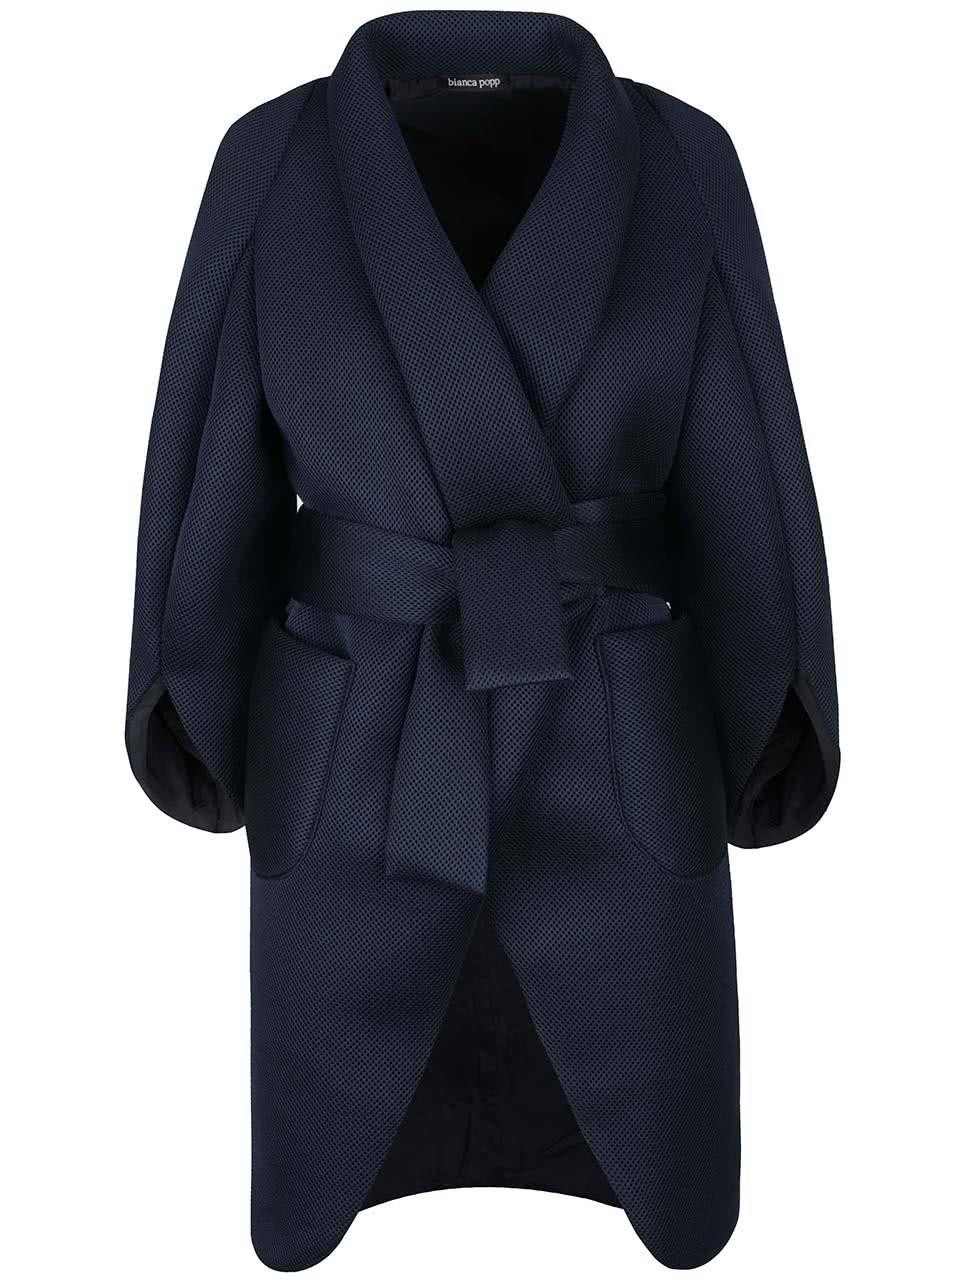 Tmavě modrý kabát s jemnou strukturou a kimonovými rukávy Bianca Popp